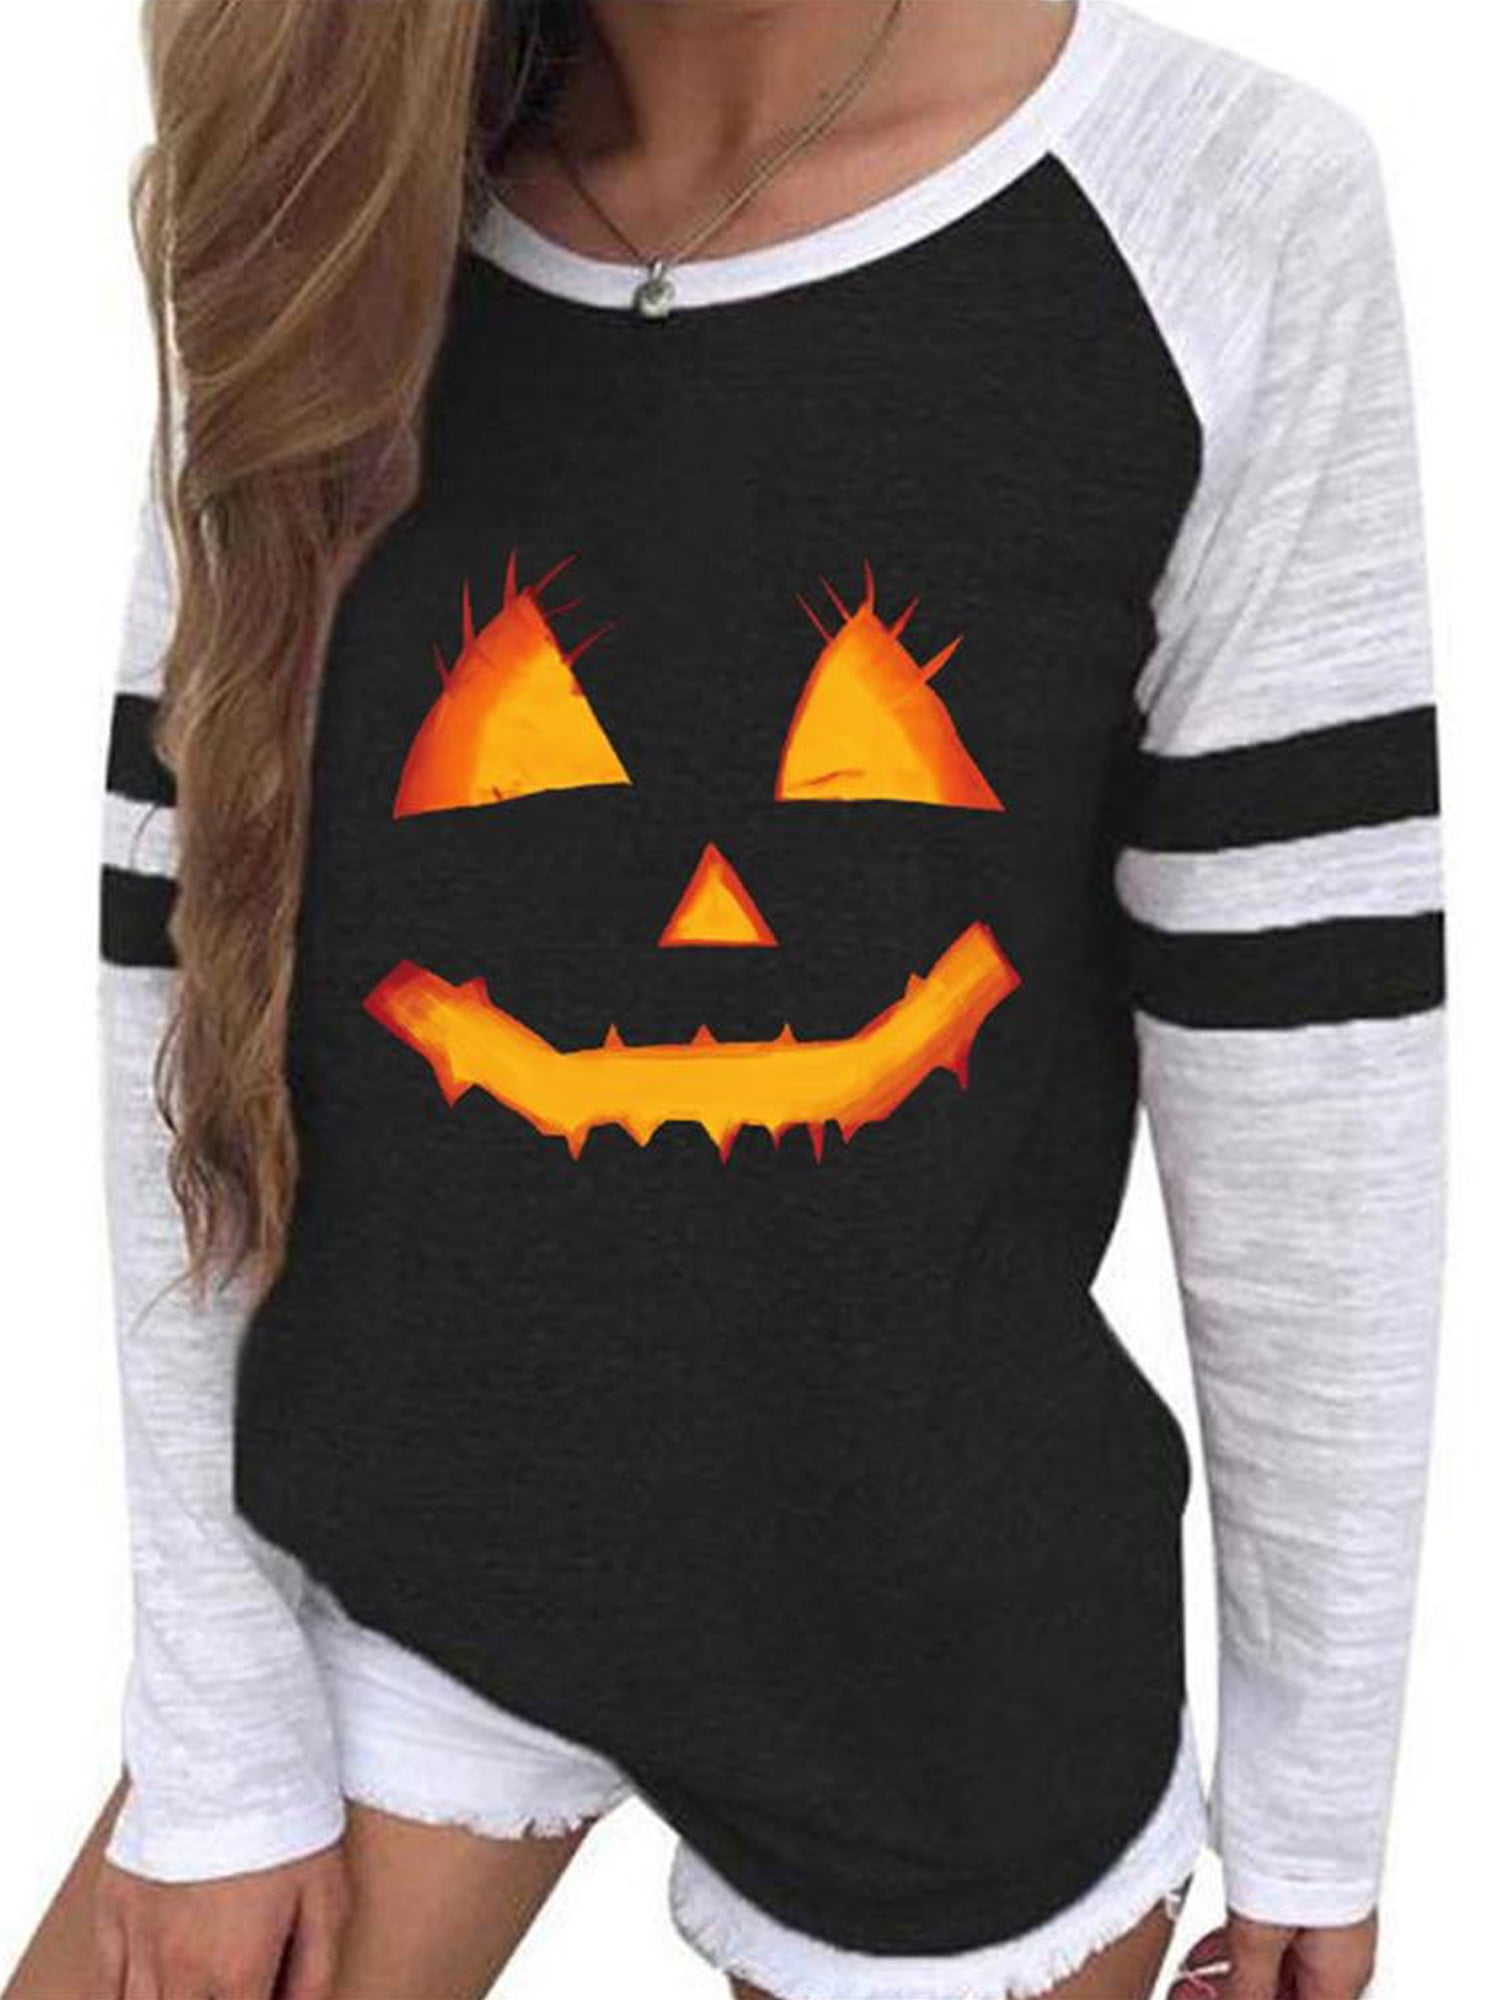 2X Halloween Raglan Super Cute LOVE Halloween with Jack O Lantern Design on premium Raglan 3/4 sleeve shirt plus size 3X